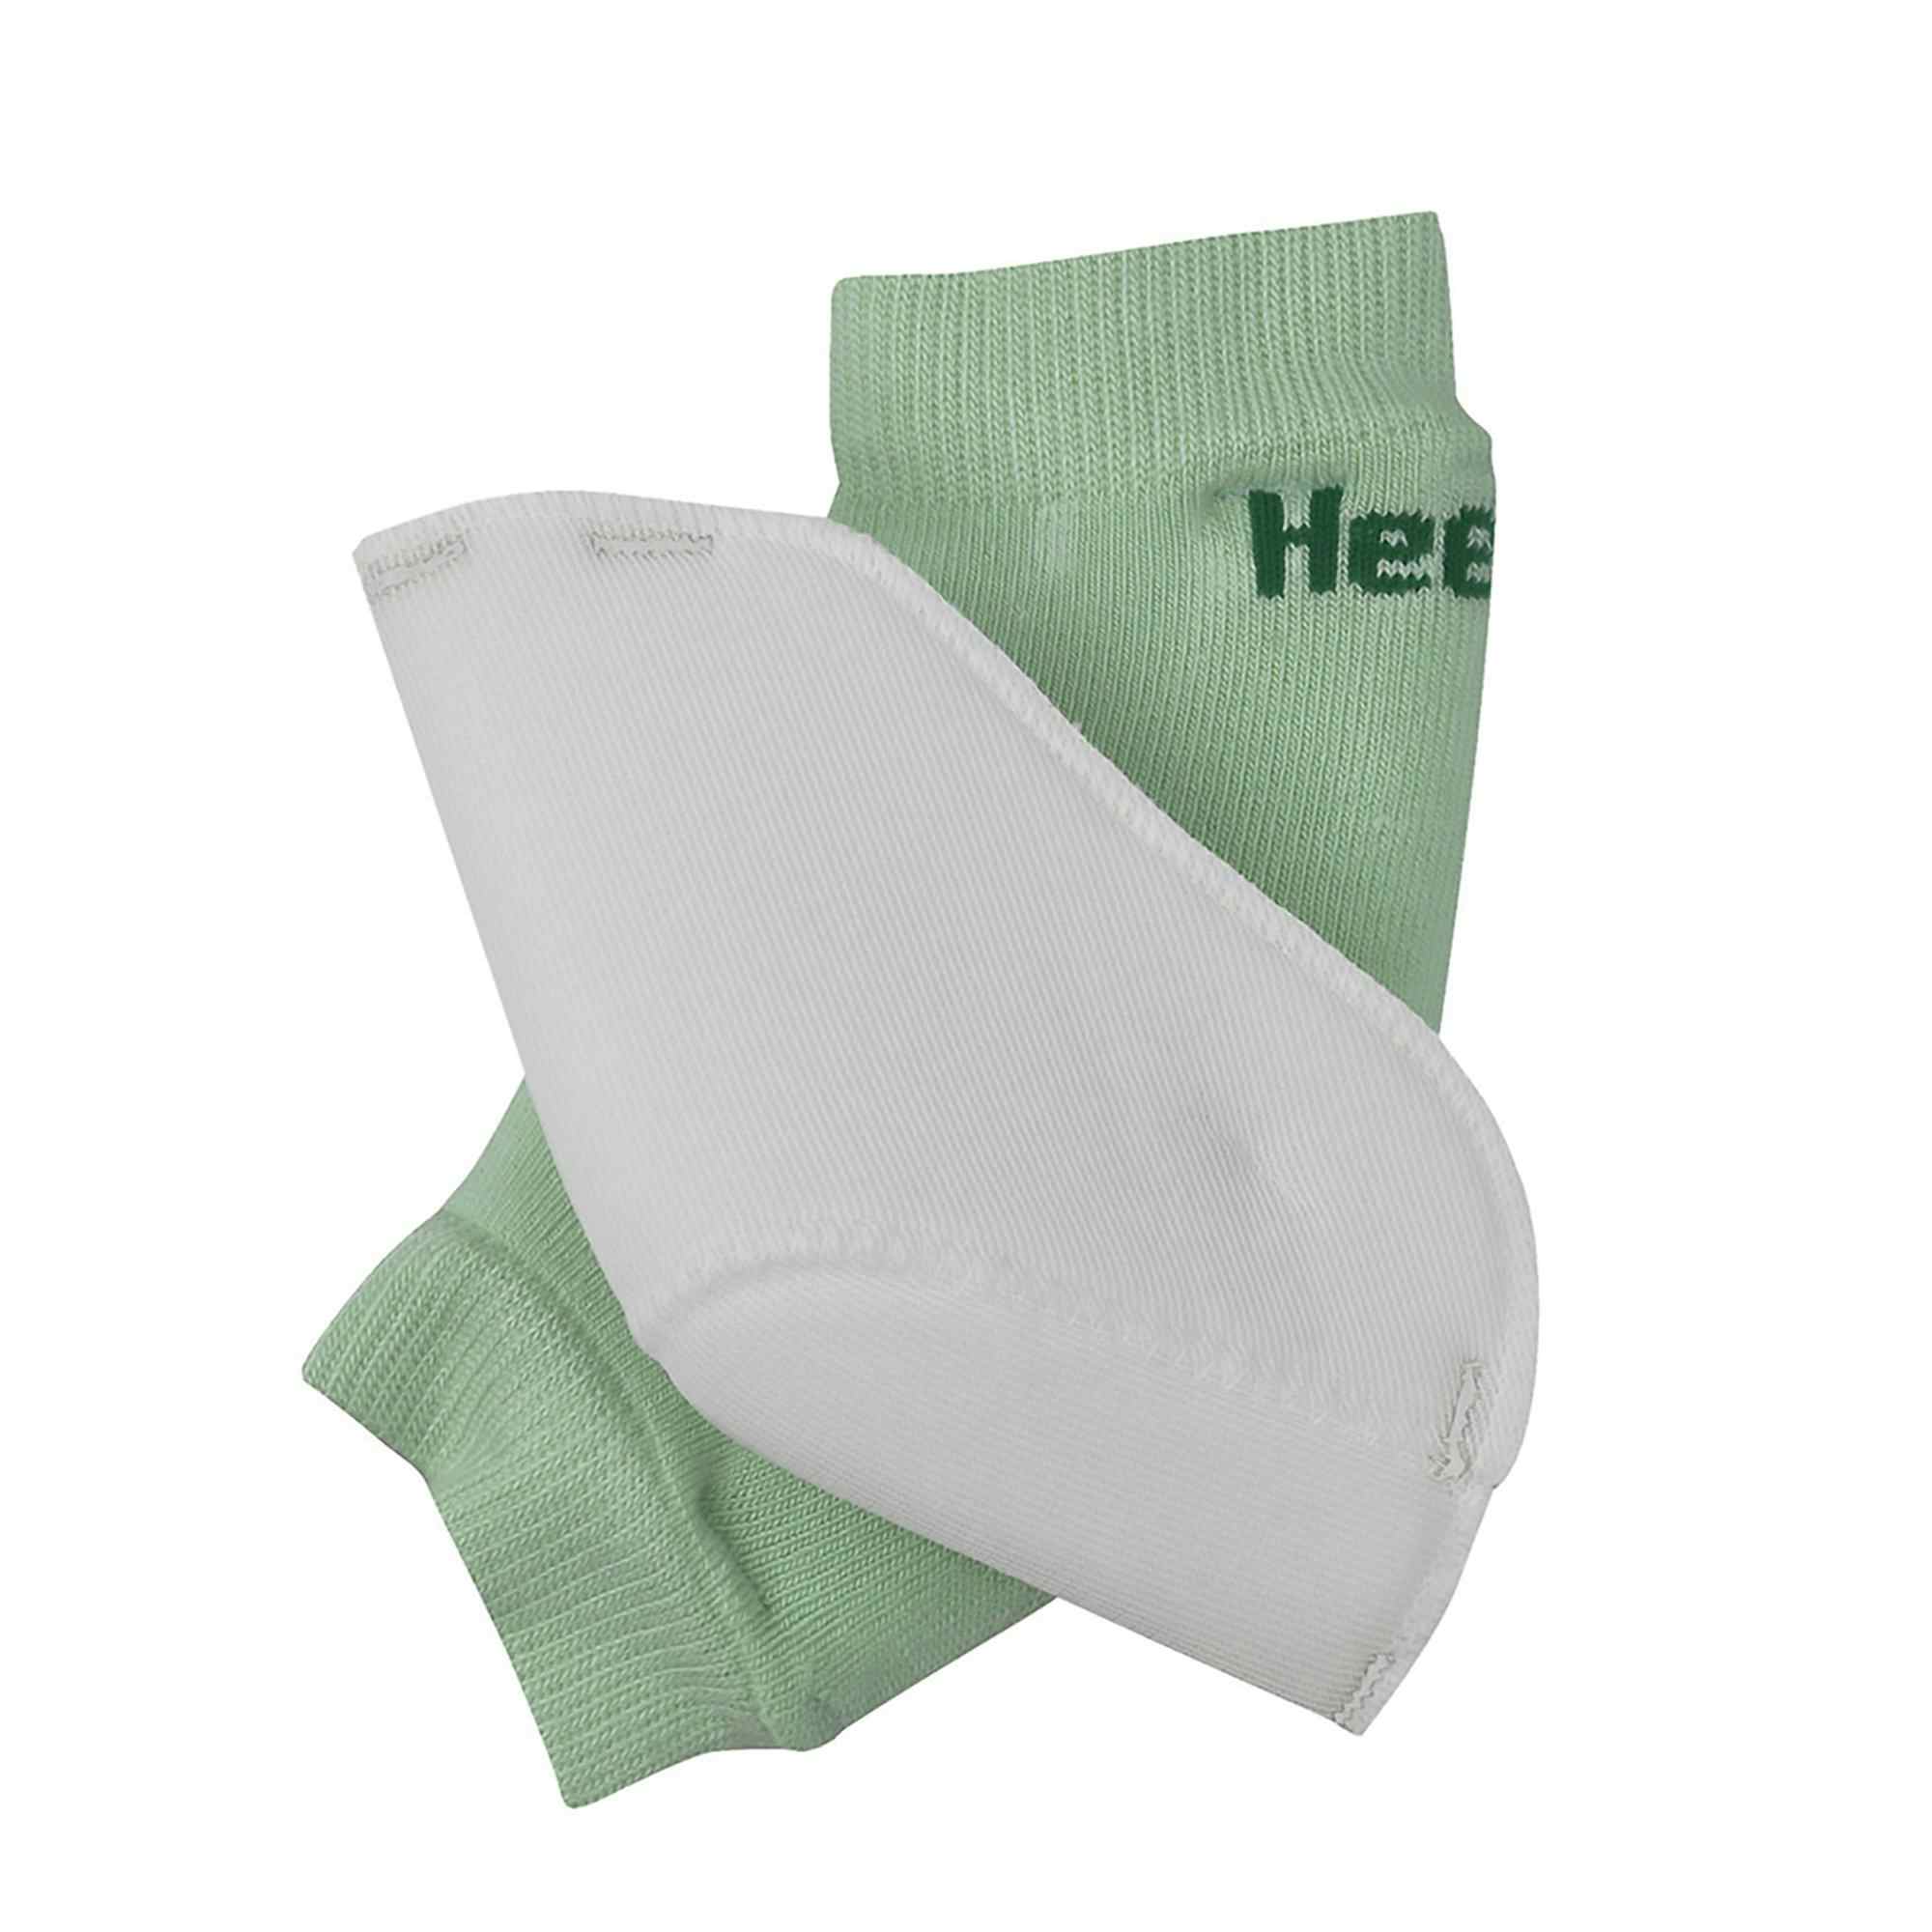 Heelbo Heel/Elbow Protection Sleeve , D 12040, Green X-Large - Case of 12